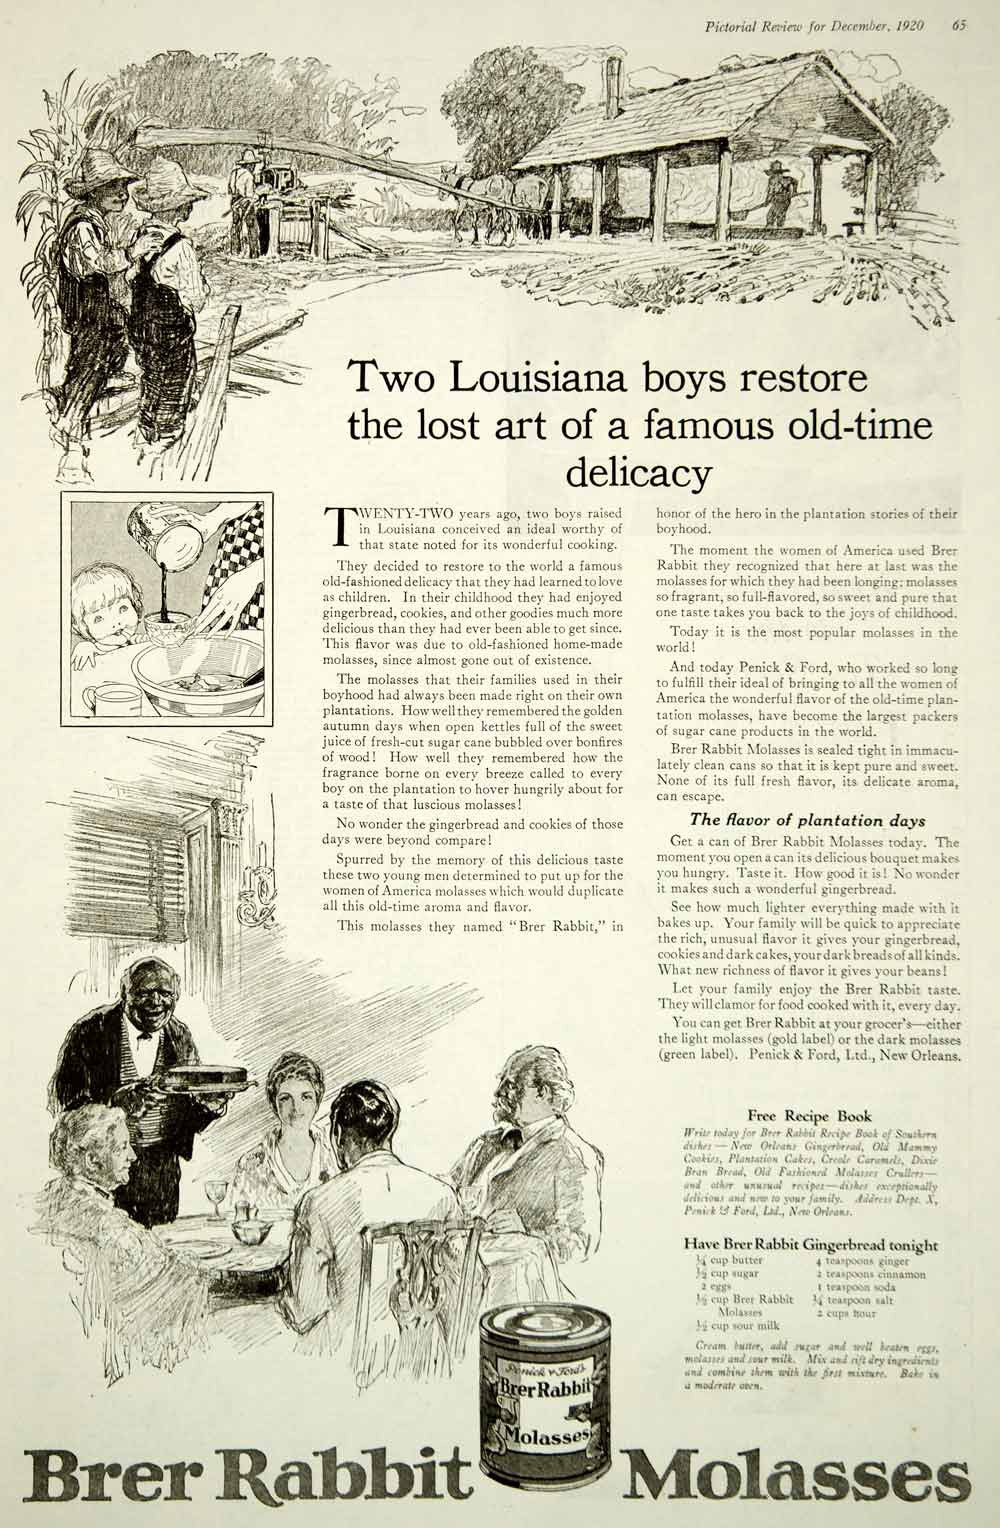 1920 Ad Brer Rabbit Molasses Sweetener History Black Americana Penick & Ford Can - Period Paper
